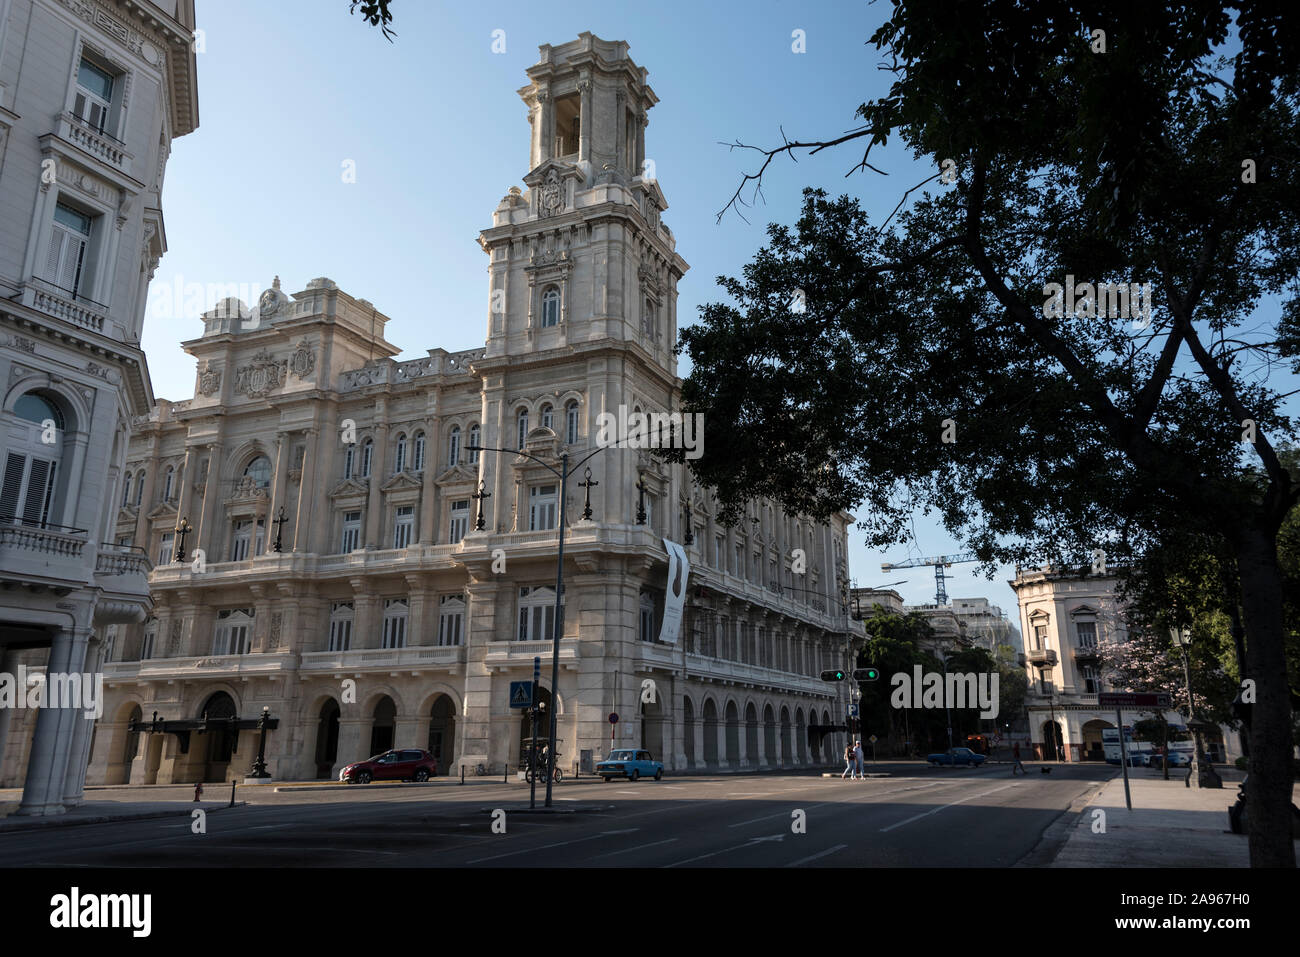 Le Museo Nacional de Bellas Artes de la Habana (Musée national des Beaux-Arts de la Havane) à la Havane, Cuba. Le musée des Beaux-Arts expose de l'art cubain Banque D'Images